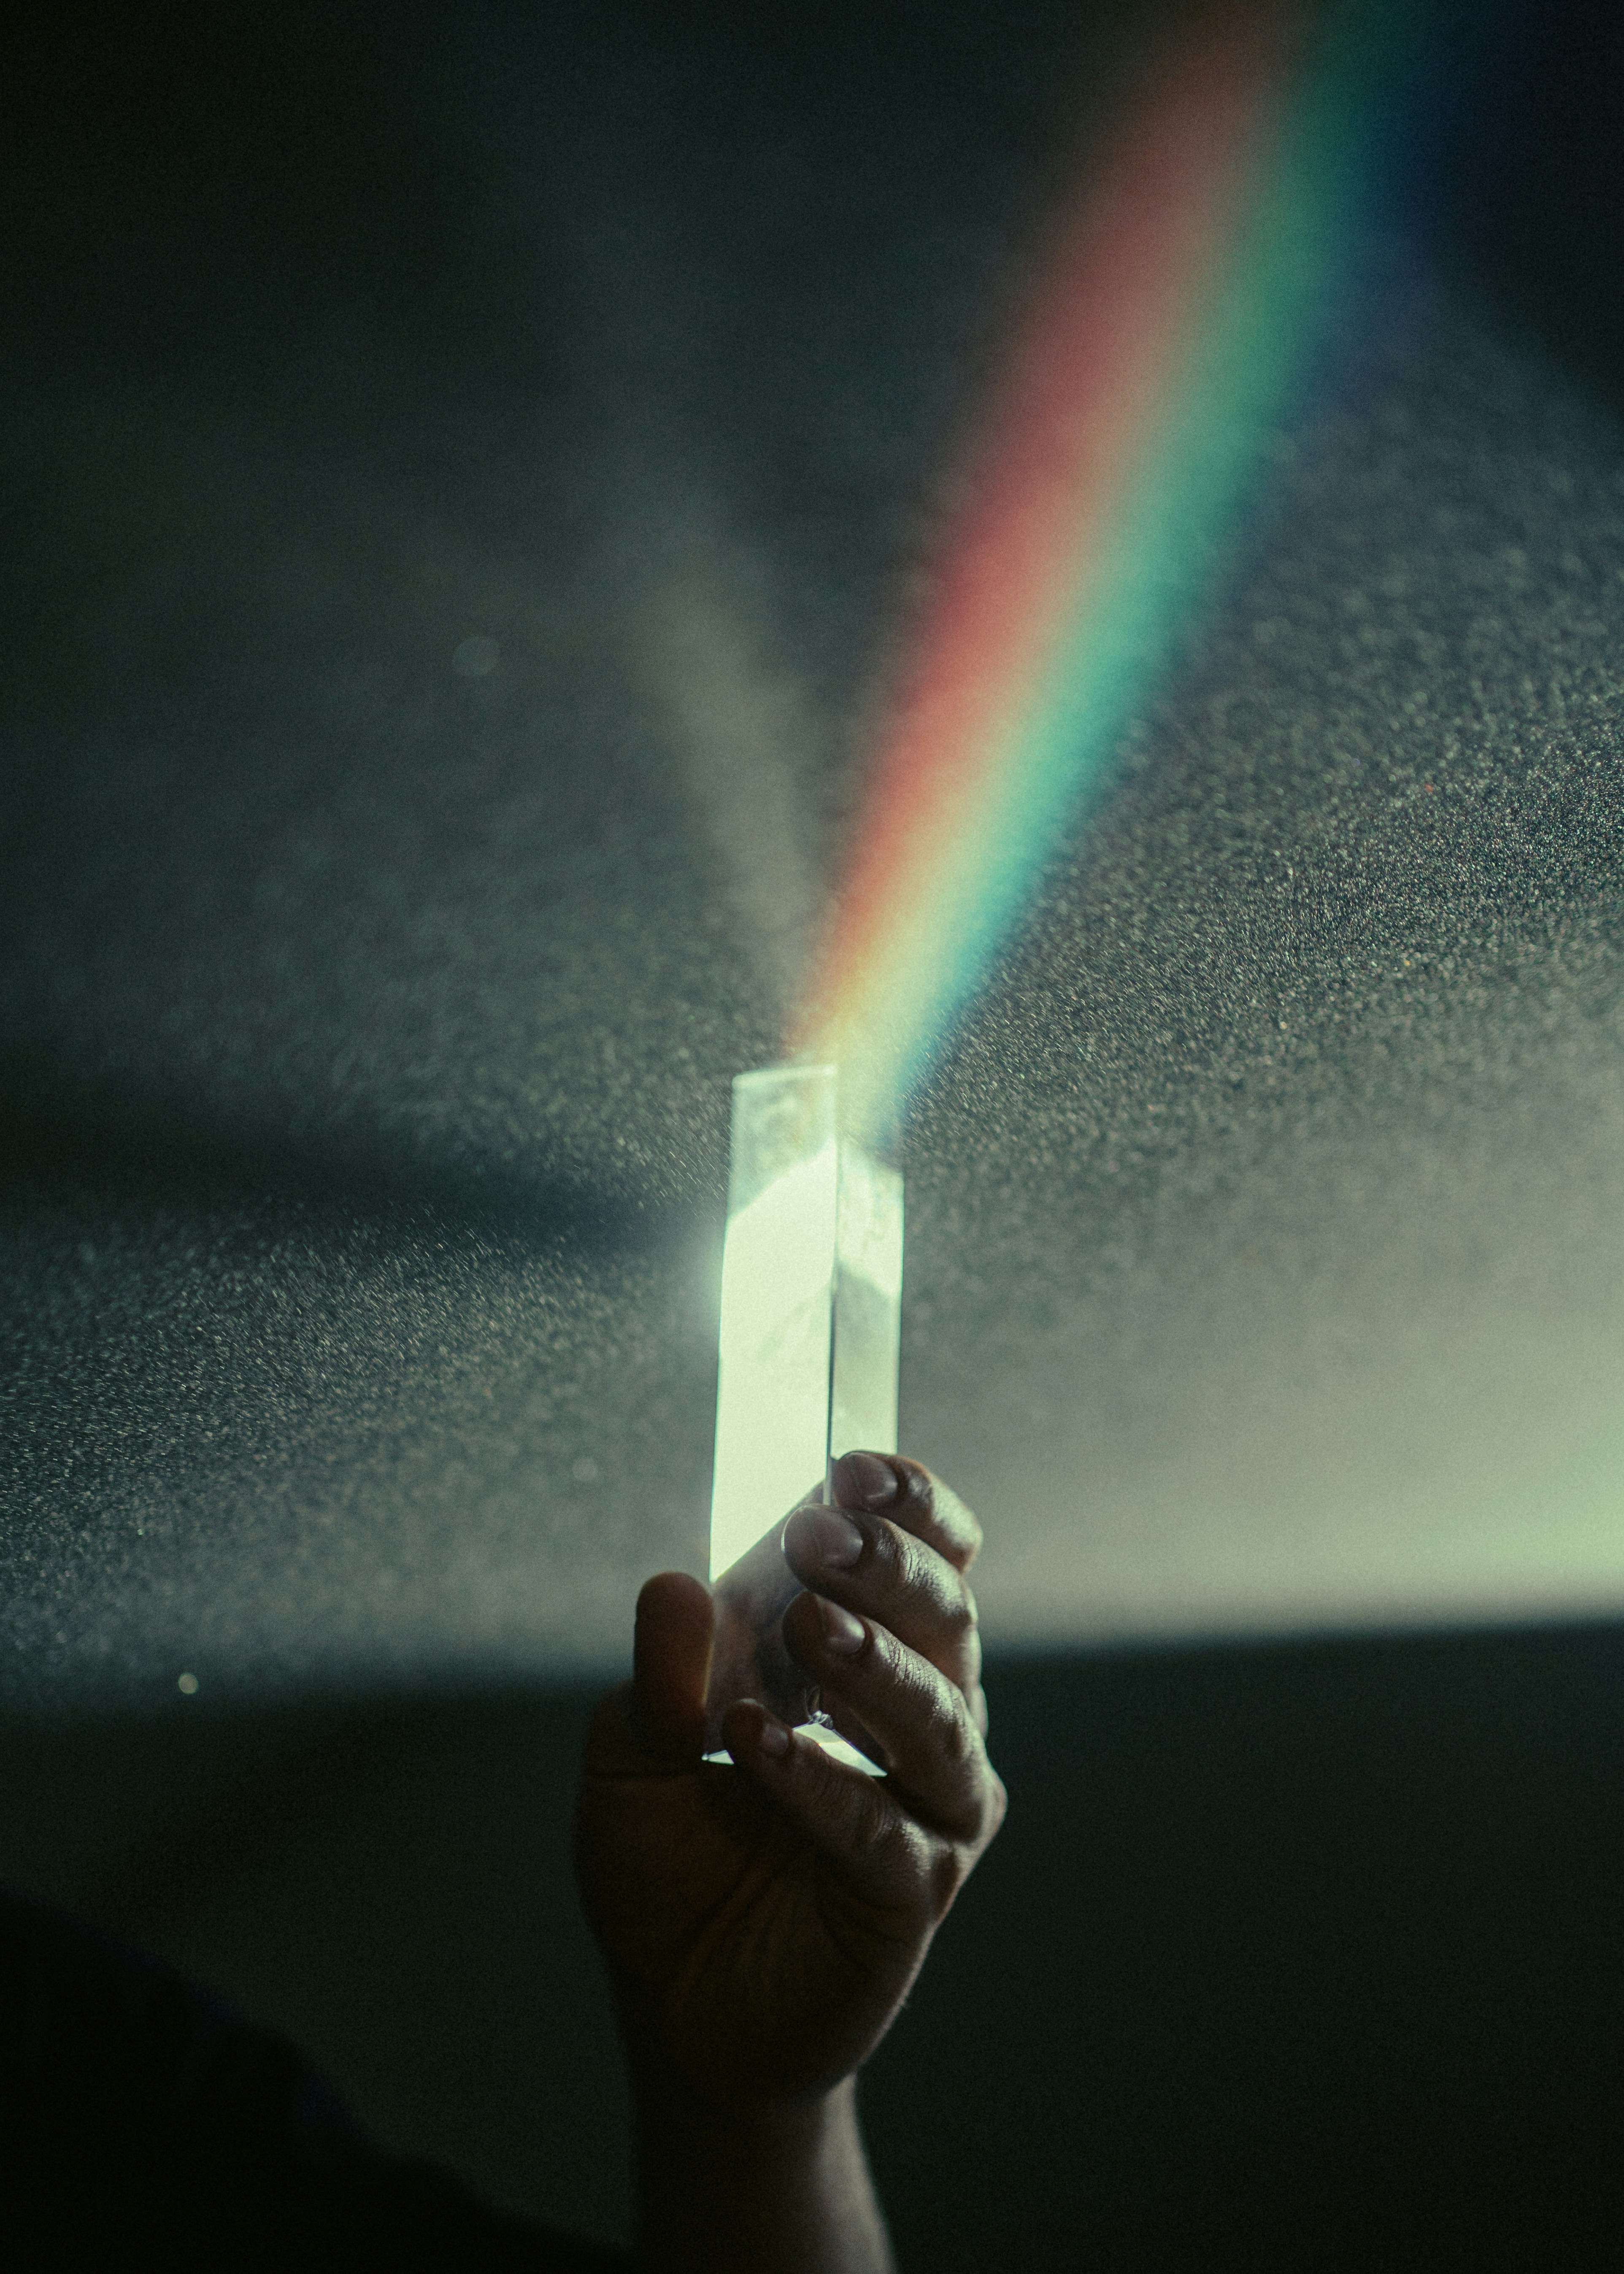 Light passes through a transparent medium